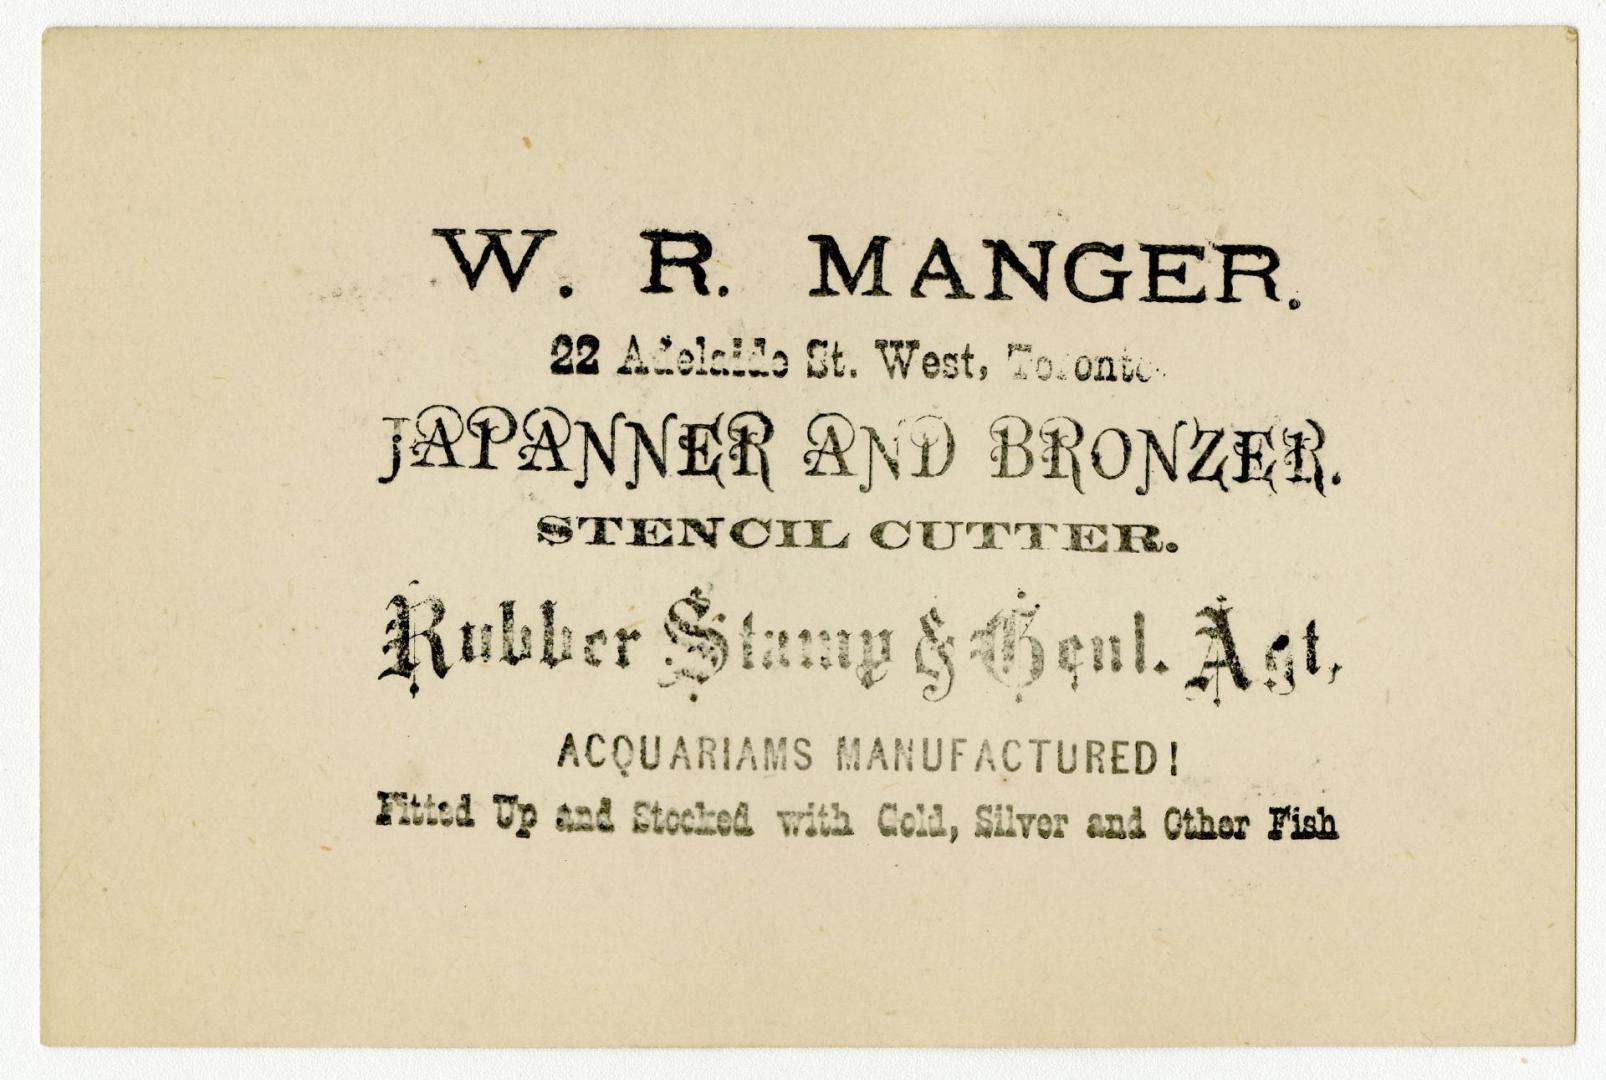 W.R. Manger Japanner and Bronzer